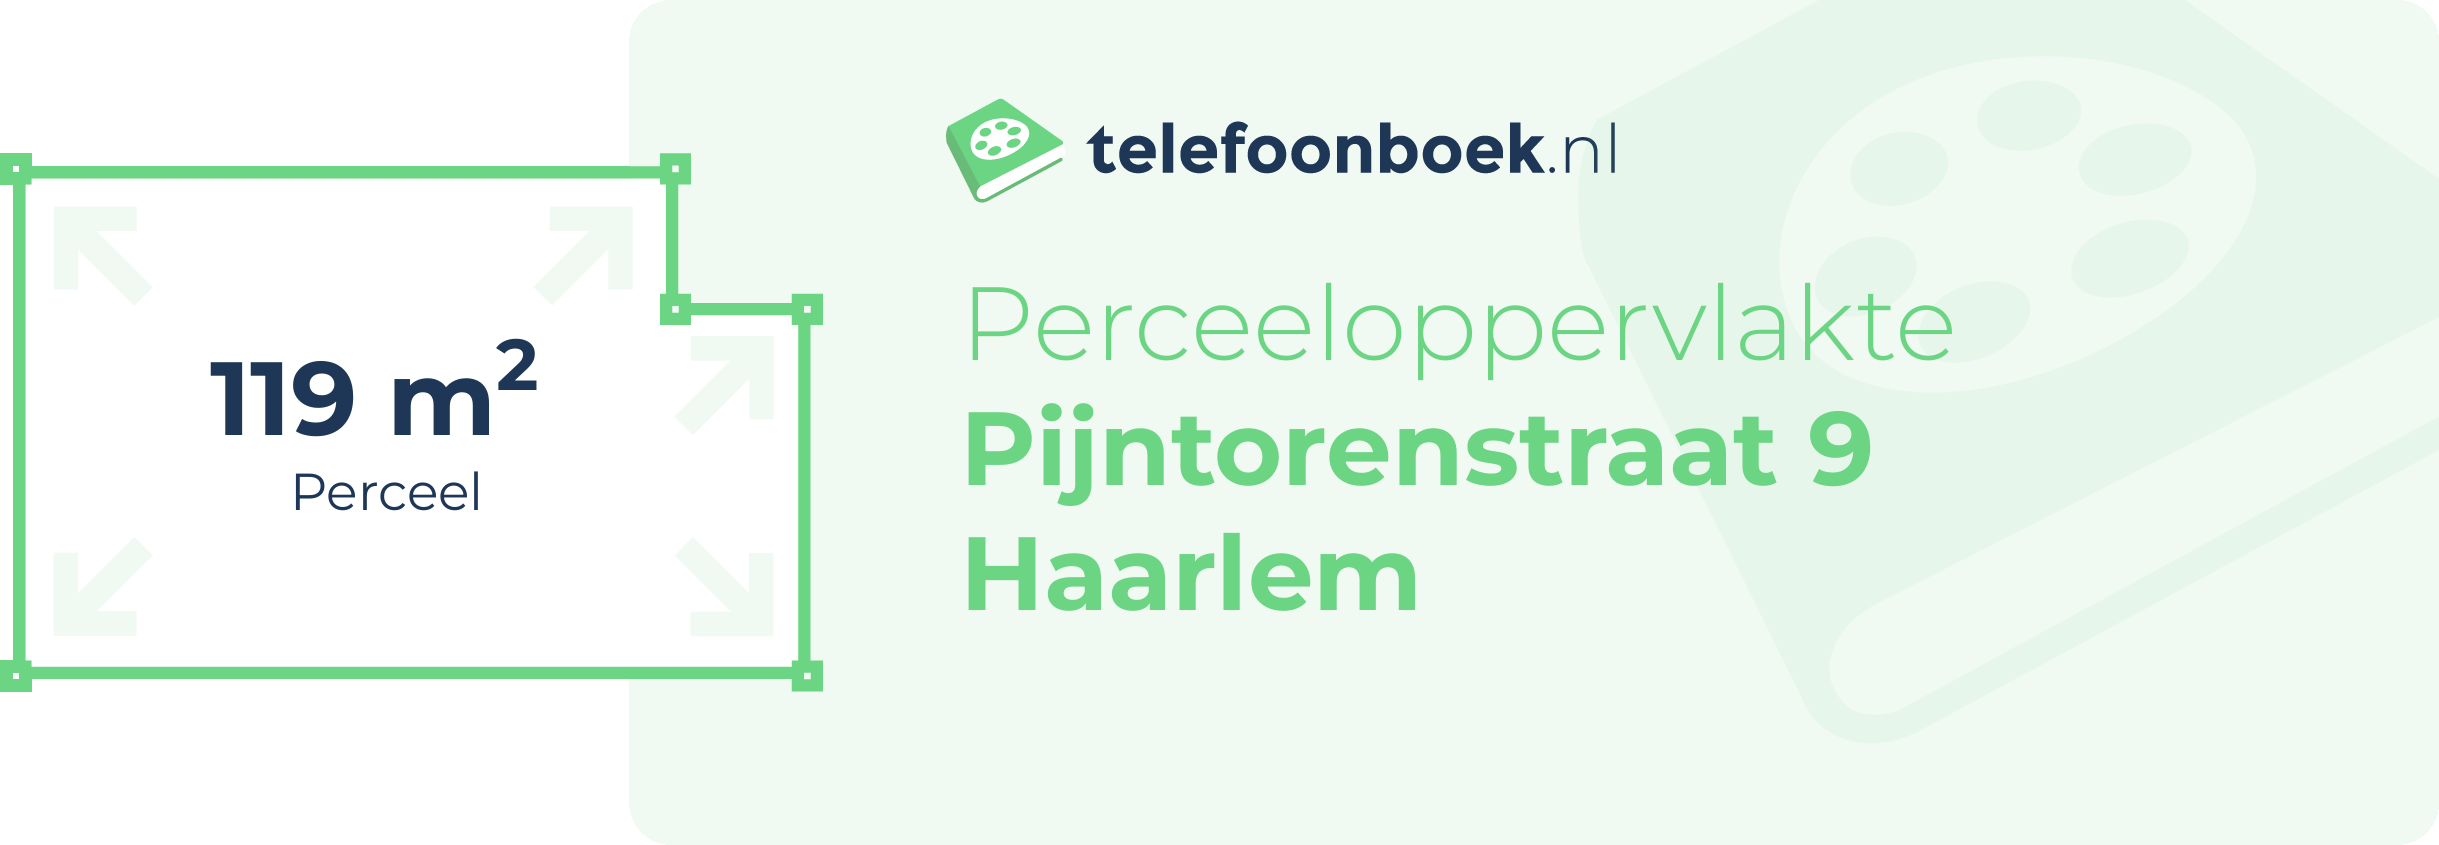 Perceeloppervlakte Pijntorenstraat 9 Haarlem